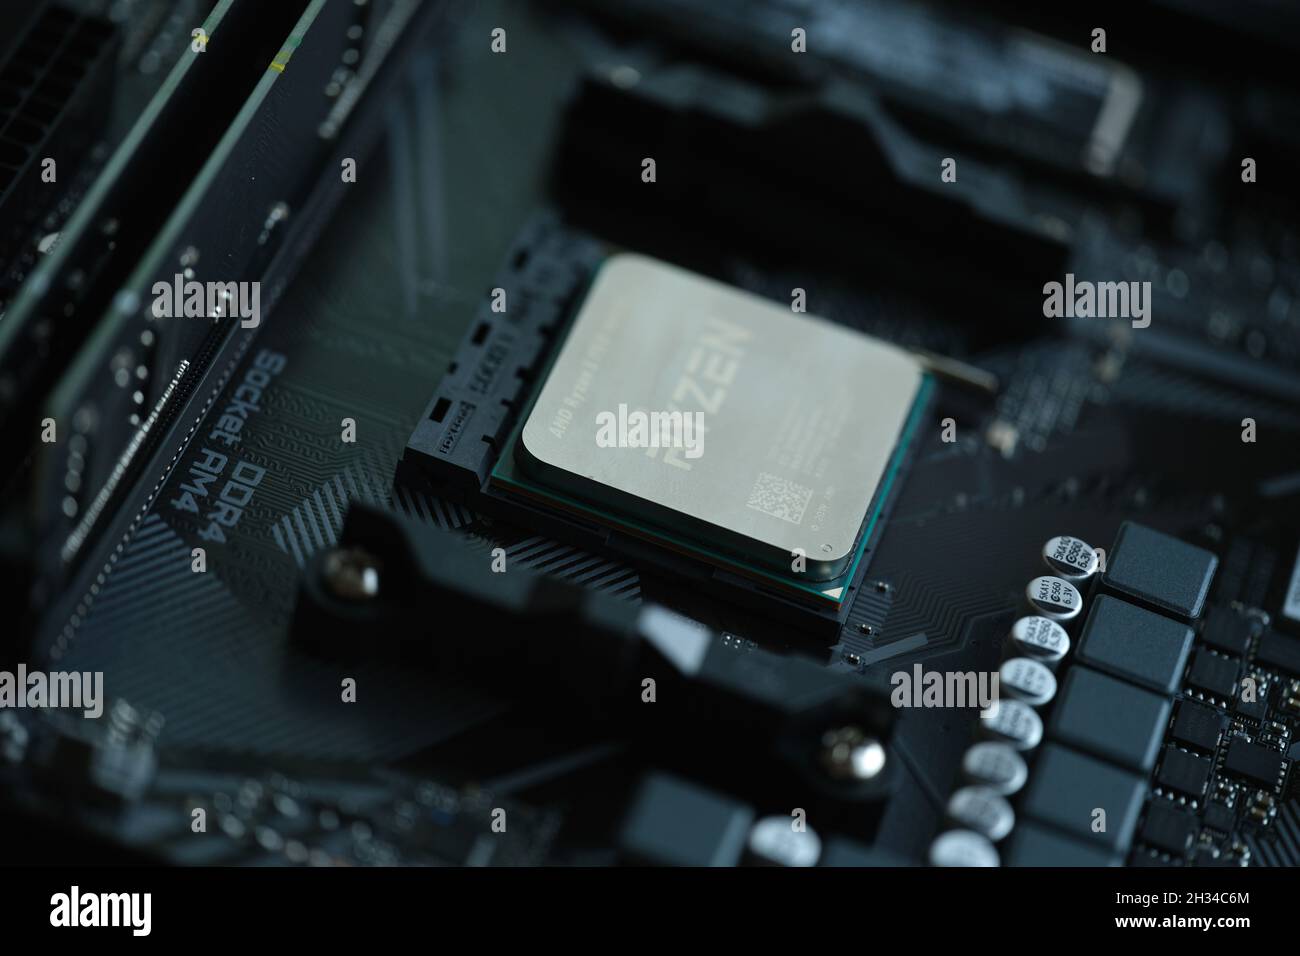 AMD Ryzen processor installed in motherboard slot AM4 closeup Stock Photo